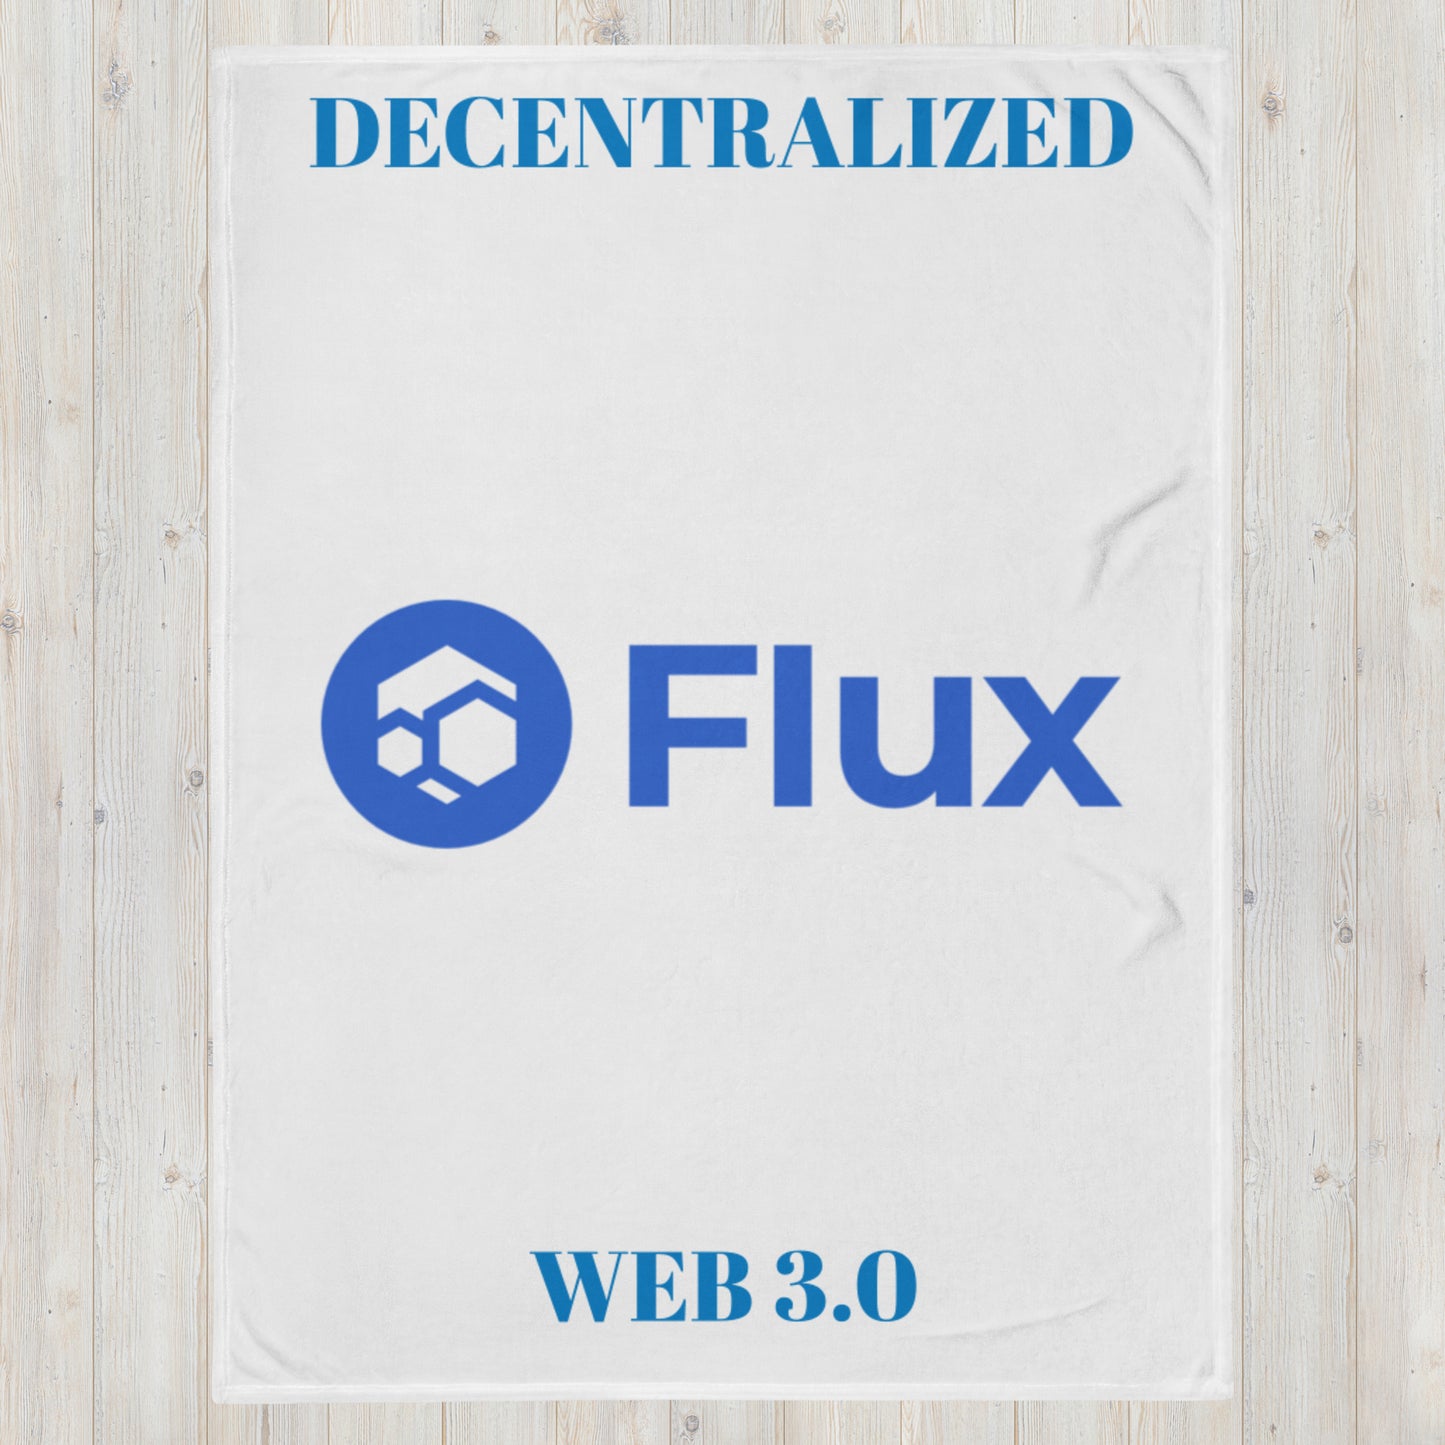 FLUX “Web 3.0” Throw Blanket